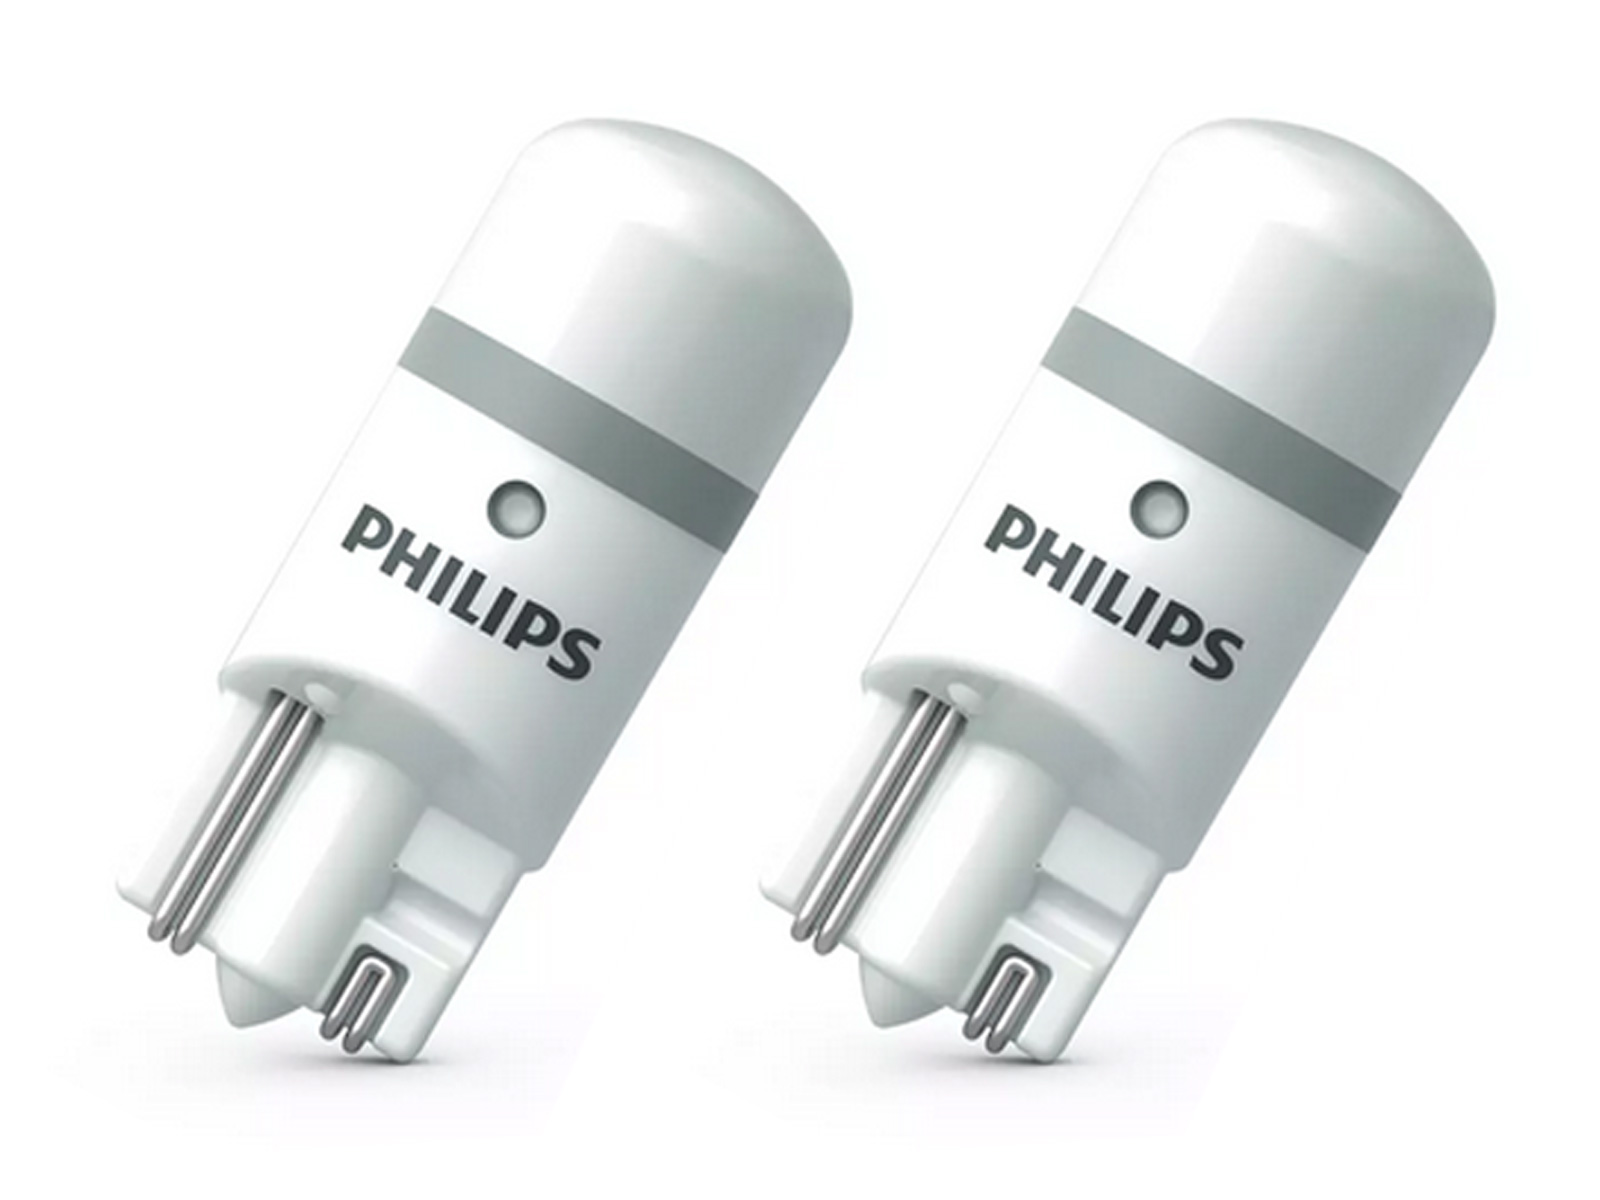 Philips Ultinon Pro6000 W5W-LED mit Straßenzulassung 6000K DuoBox